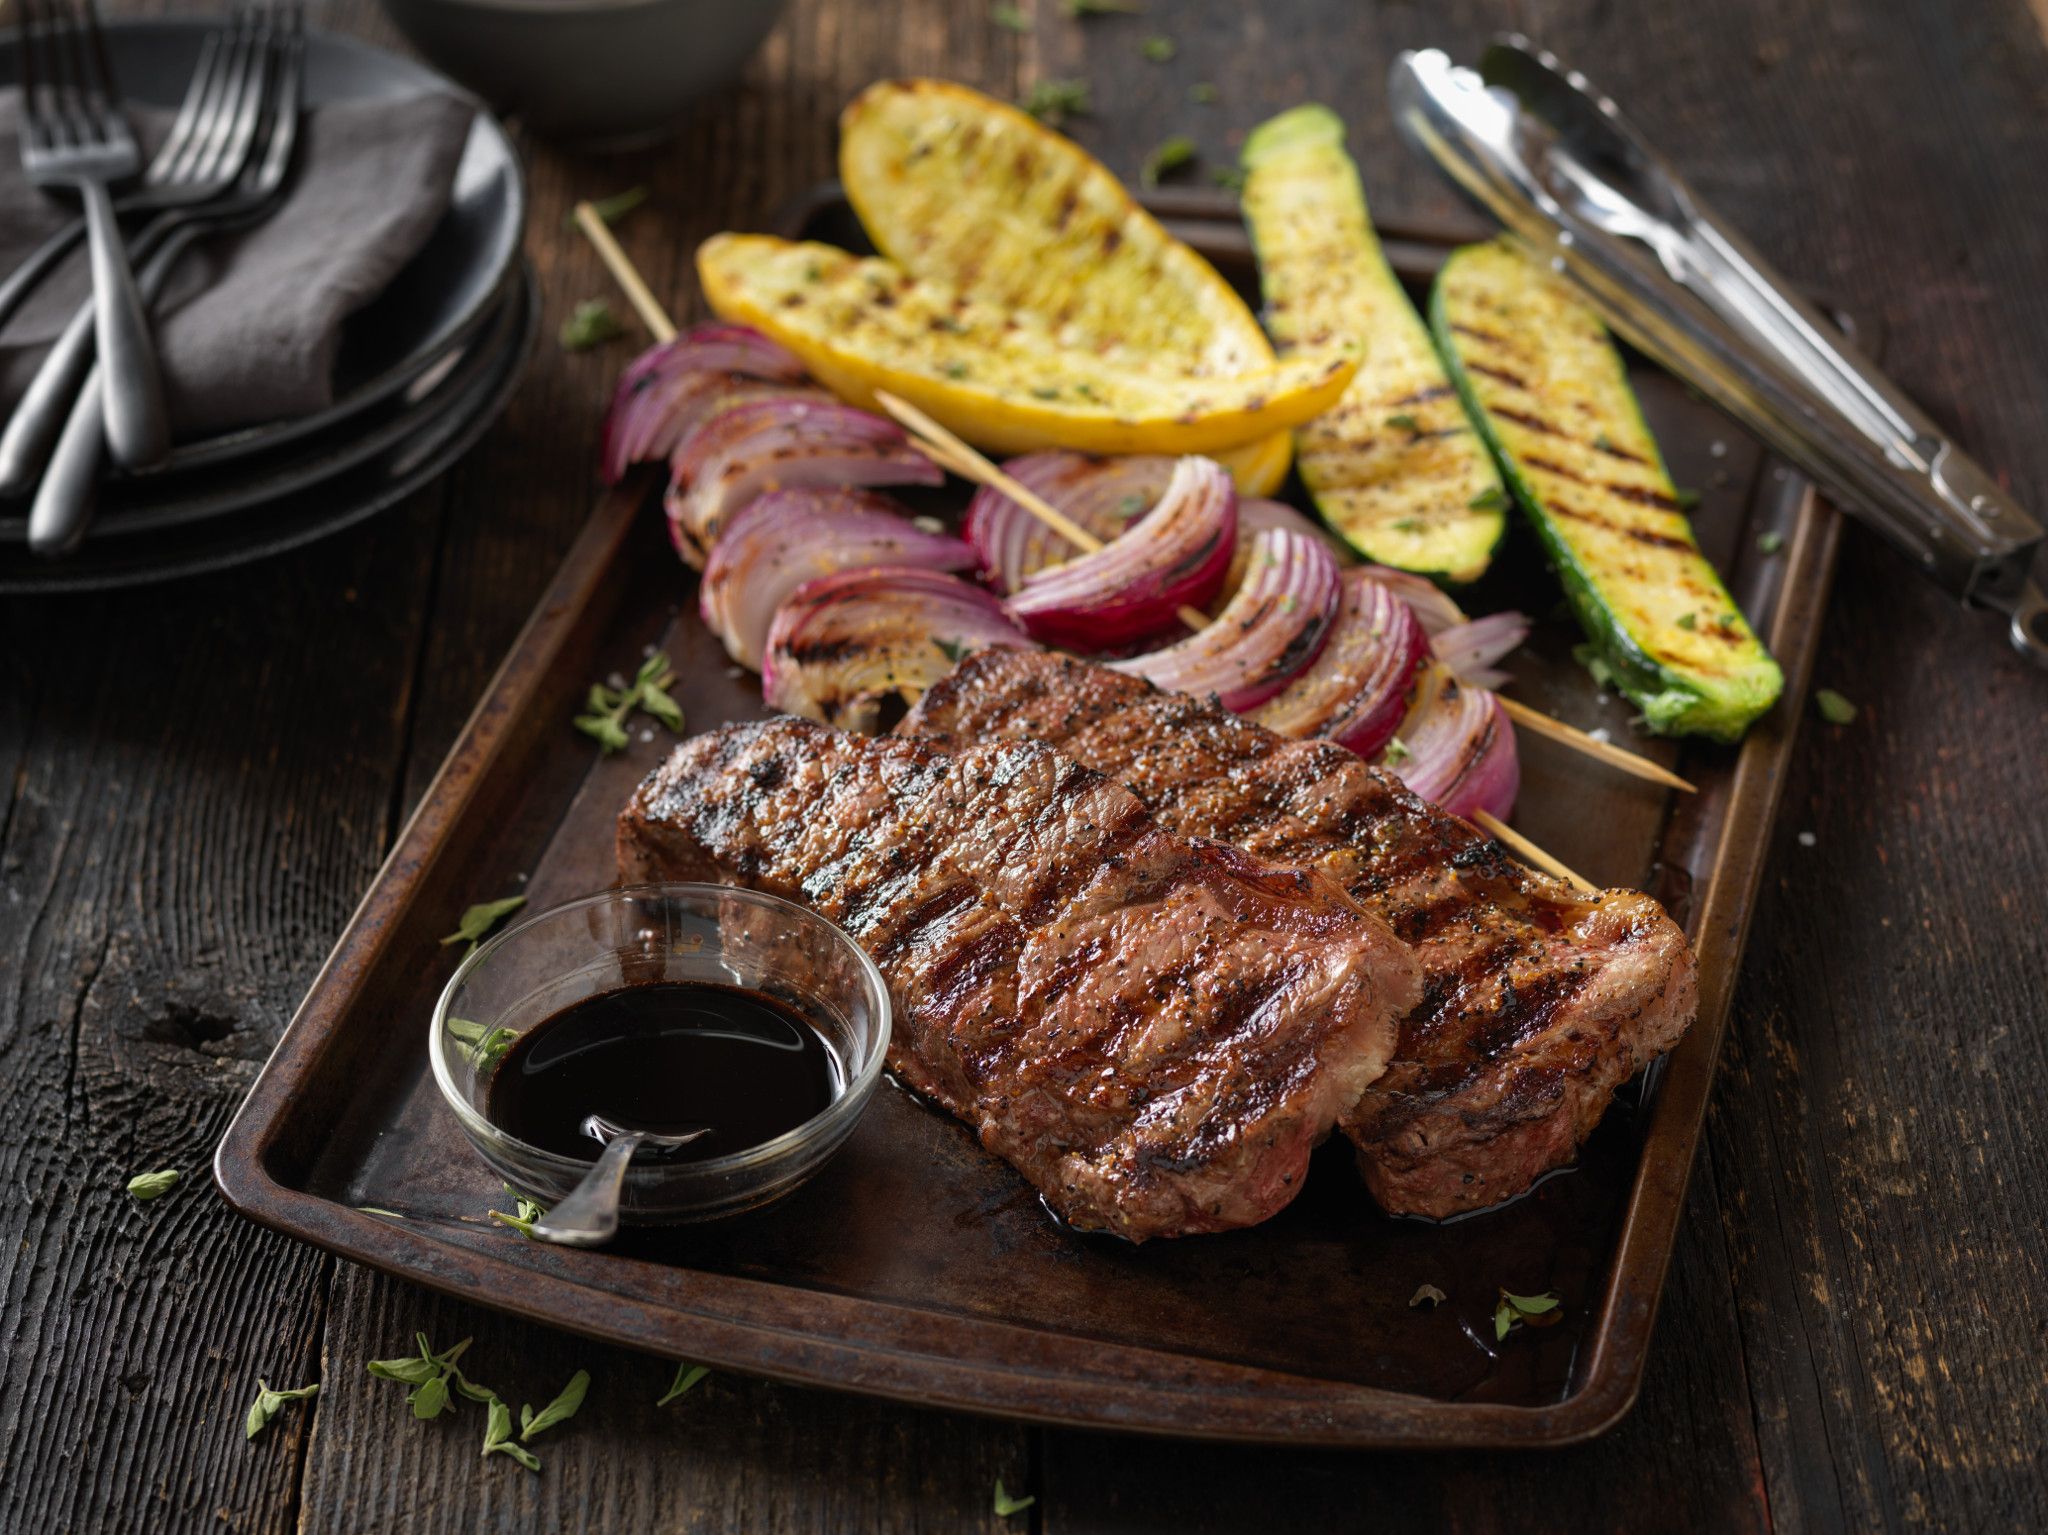 http://embed.widencdn.net/img/beef/1edb2fro7x/exact/beef-strip-steaks-with-grilled-balsamic-vegetables-horizontal.tif?keep=c&u=7fueml